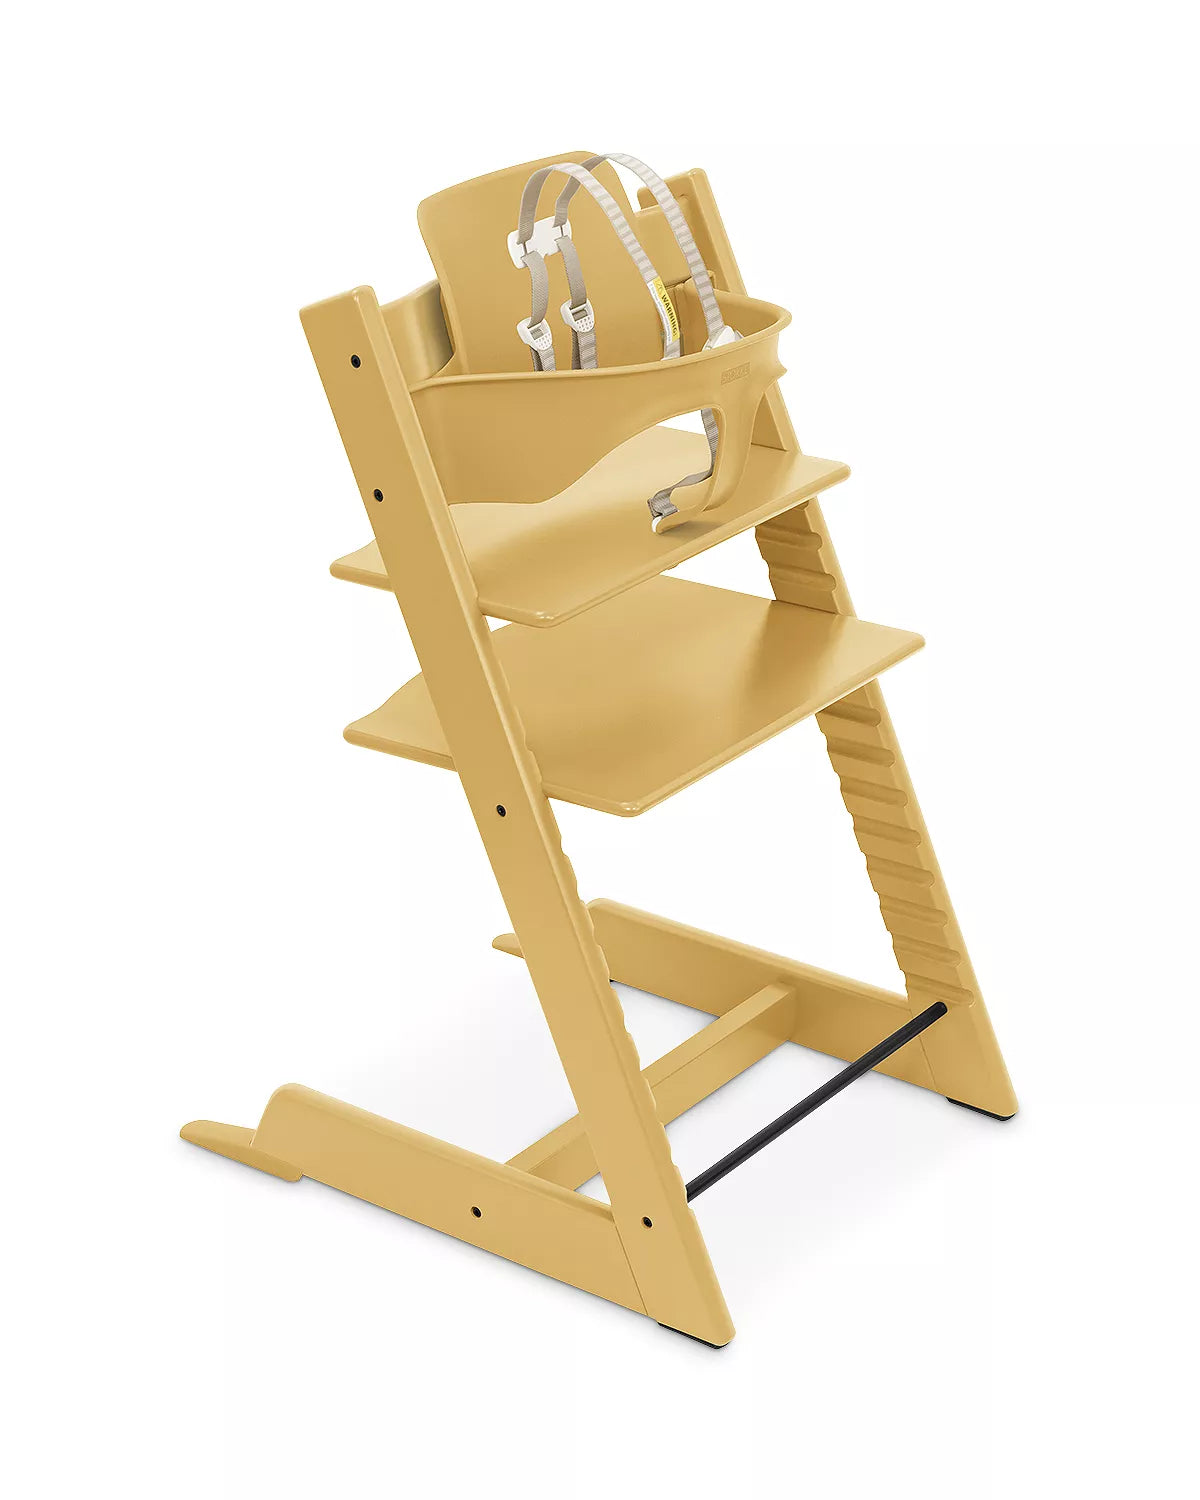 New Stokke Tripp Trapp Modern Classic Yellow Beech Wood Baby High Chair (sunflower yellow)